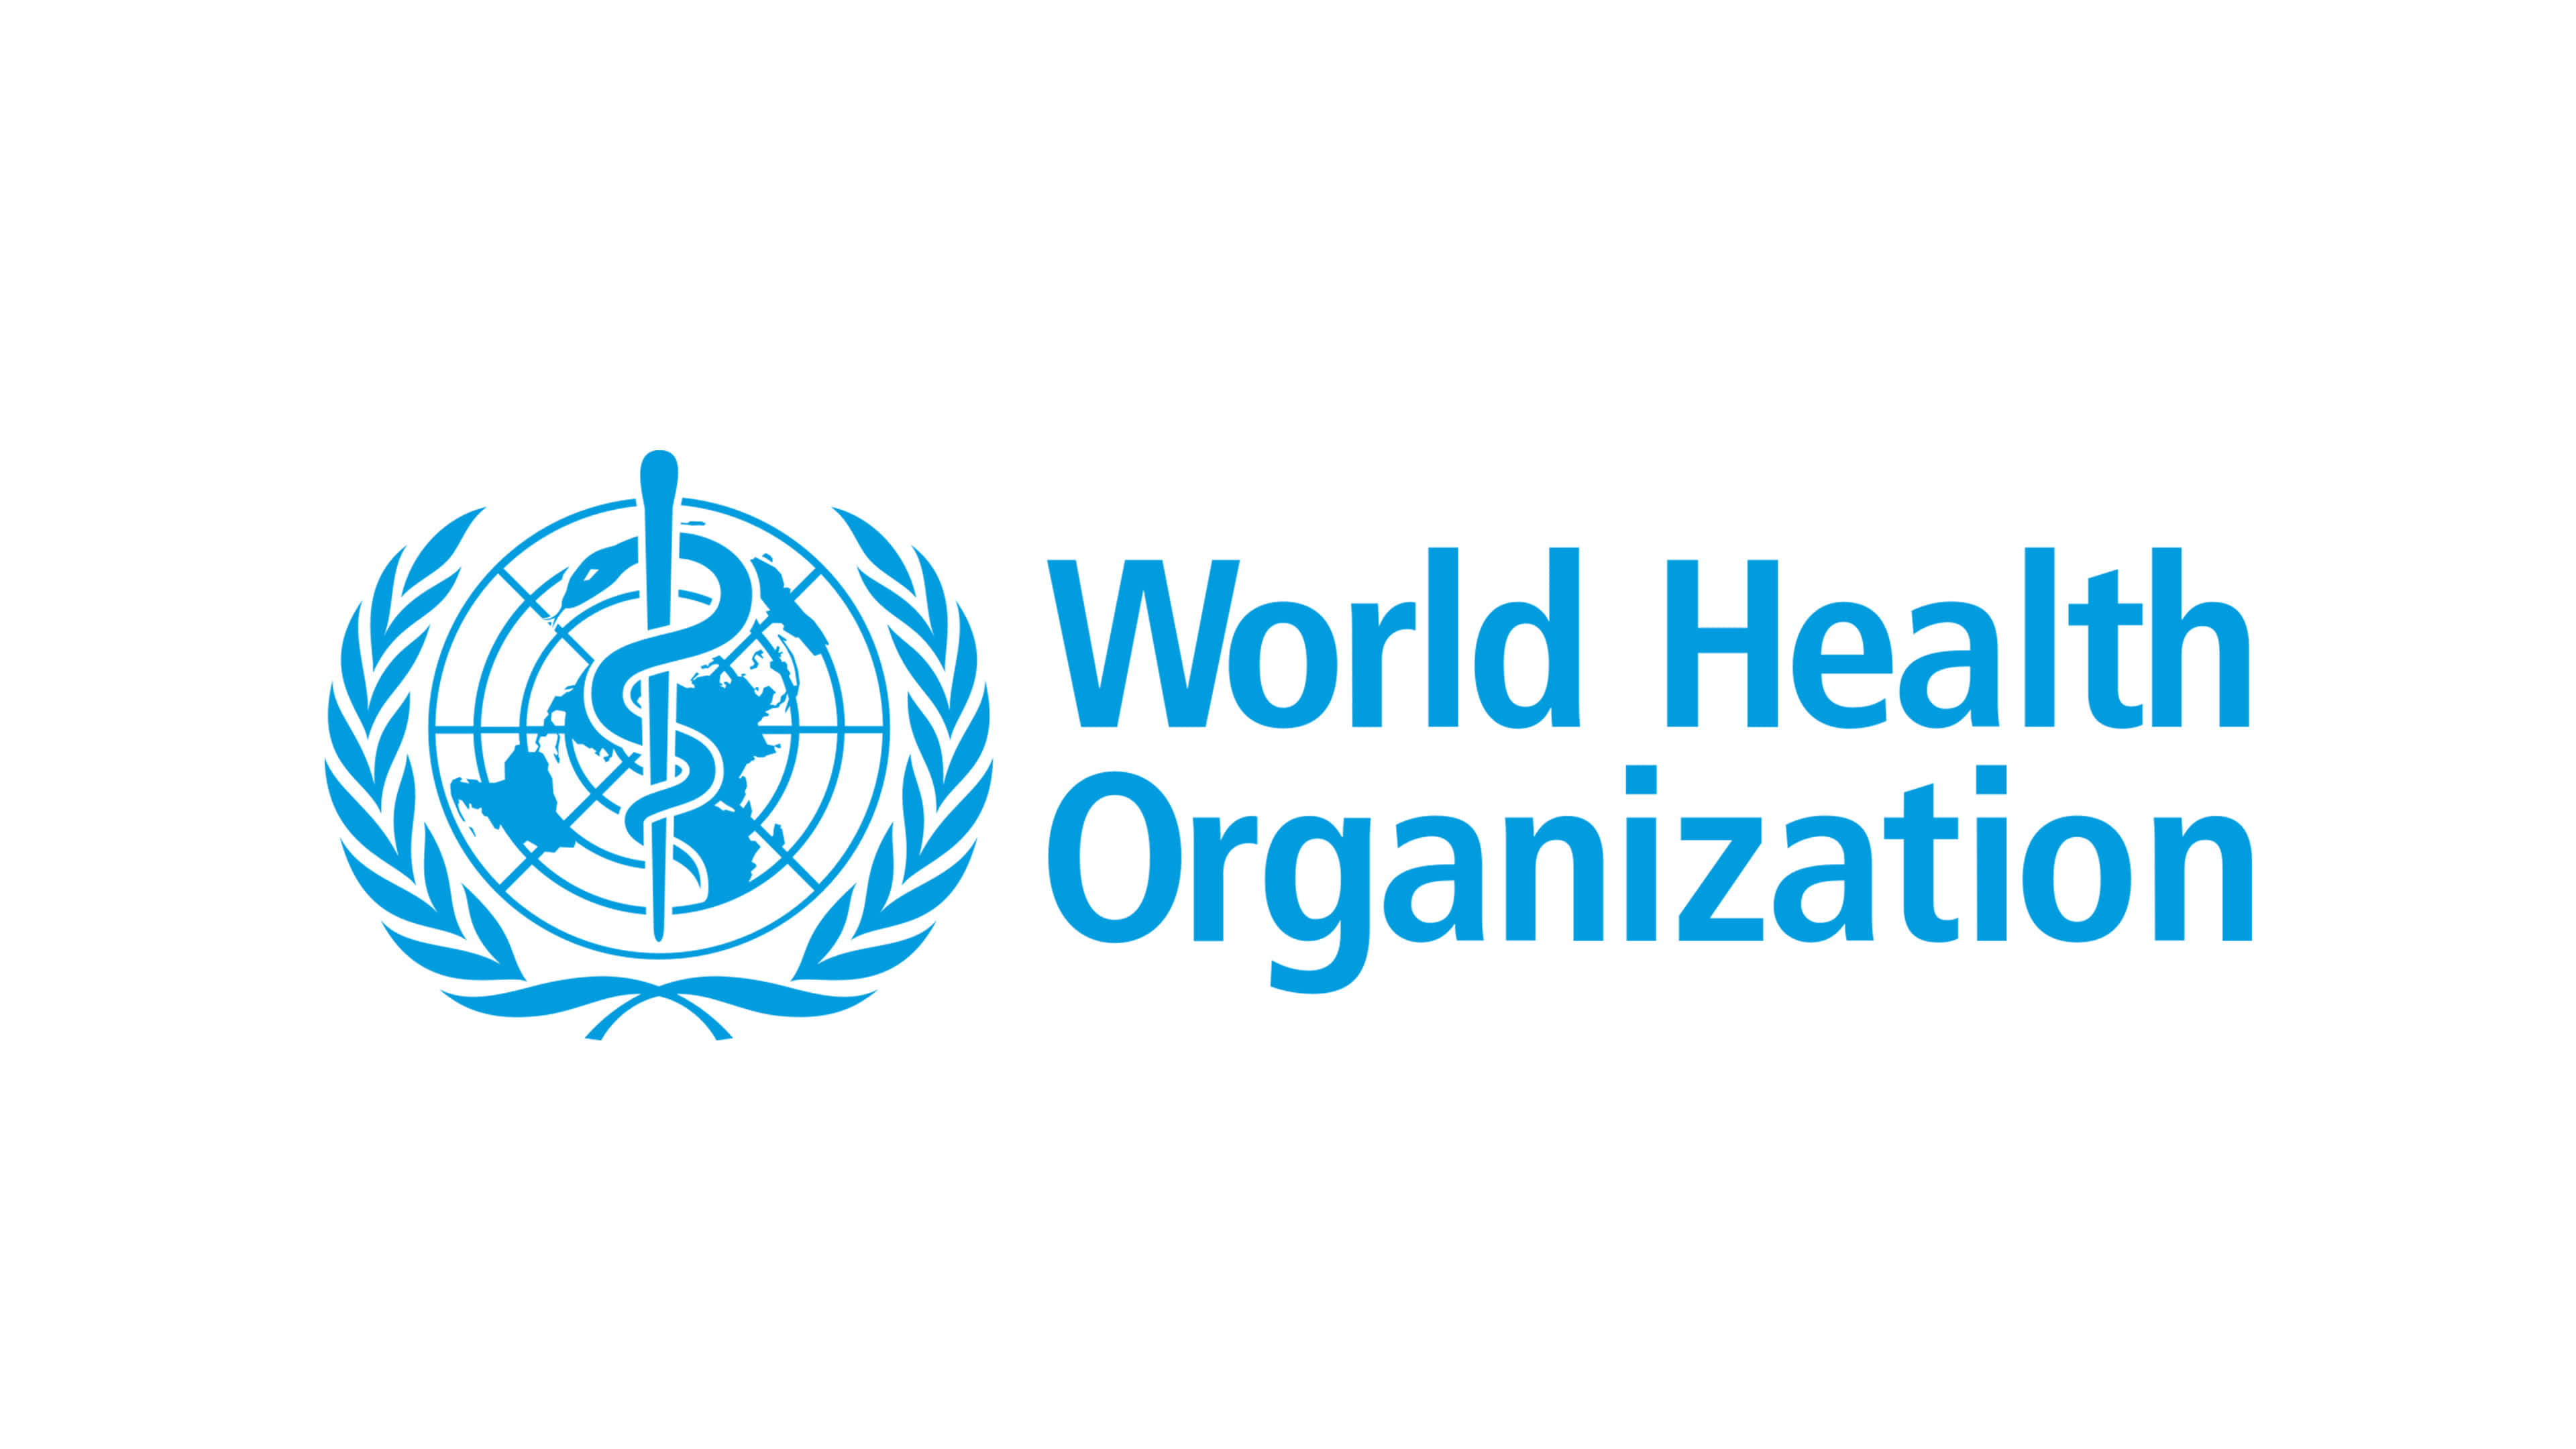 World Health Organization logo, UHD wallpaper, Health awareness, Global health initiatives, 3840x2160 4K Desktop